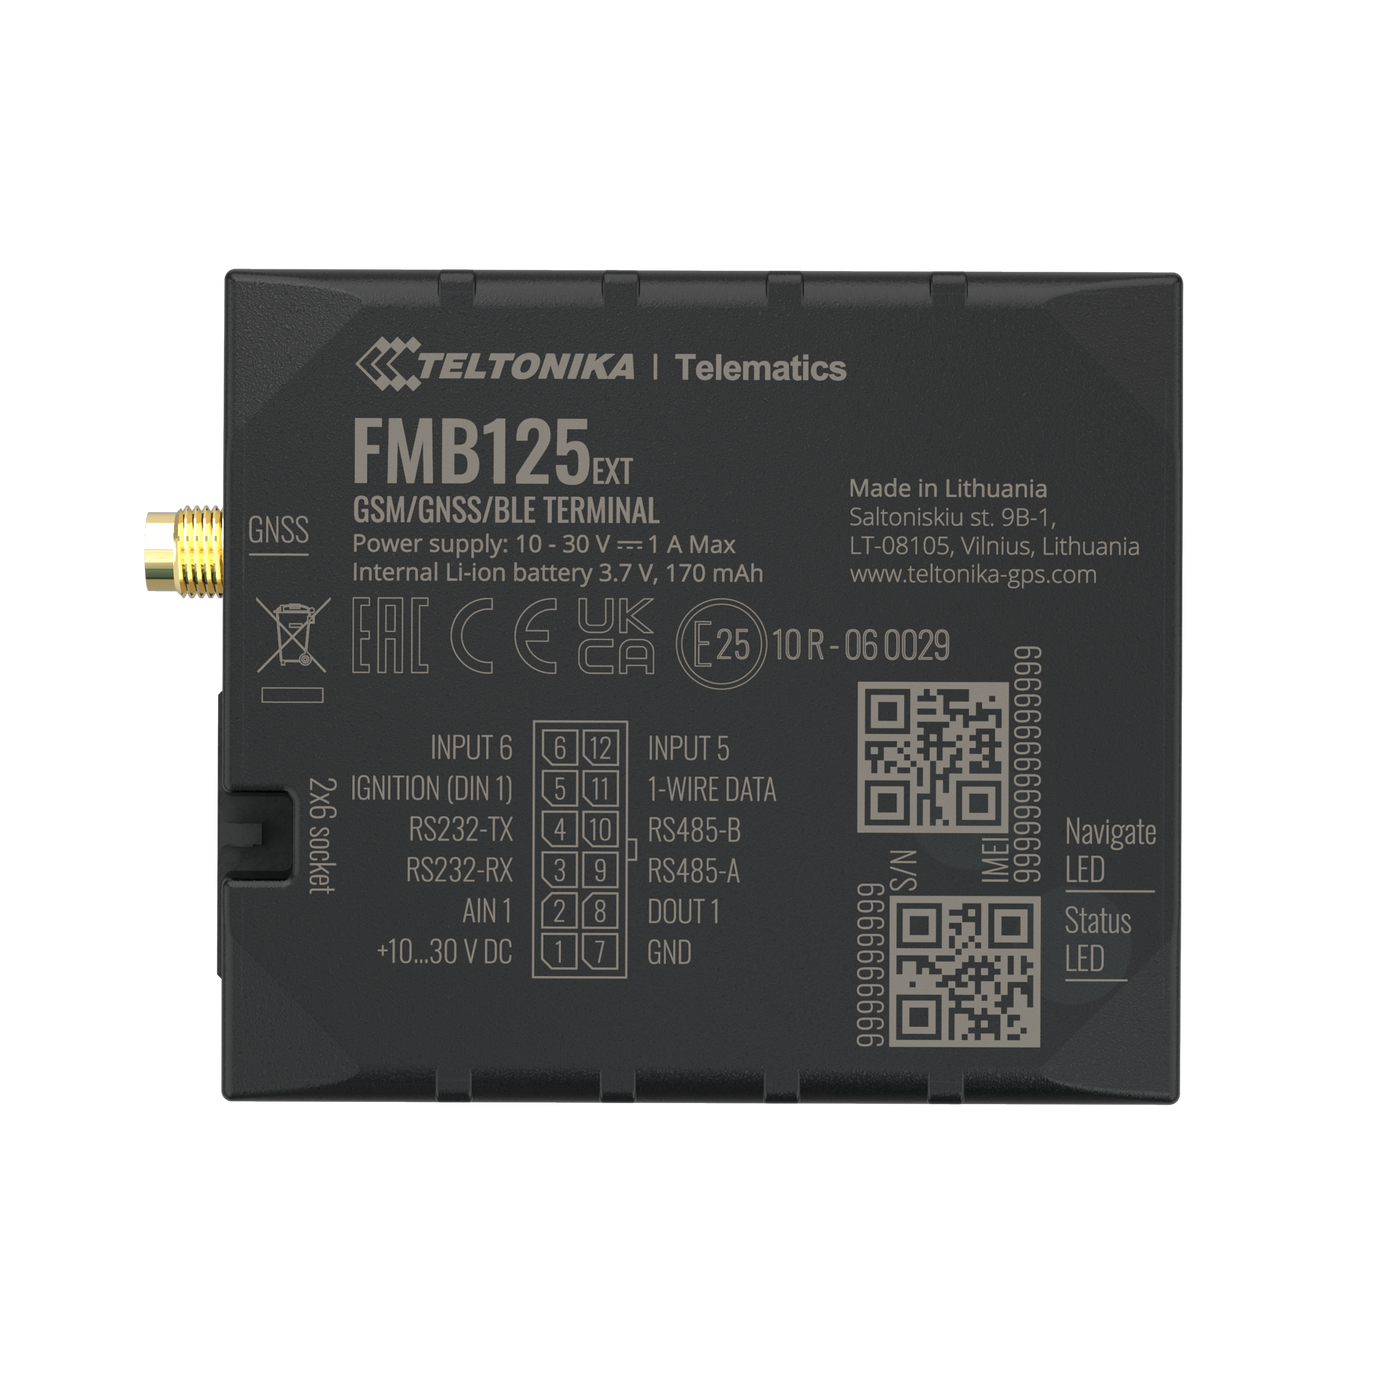 Teltonika FMB125 - GPS with Accelerometer